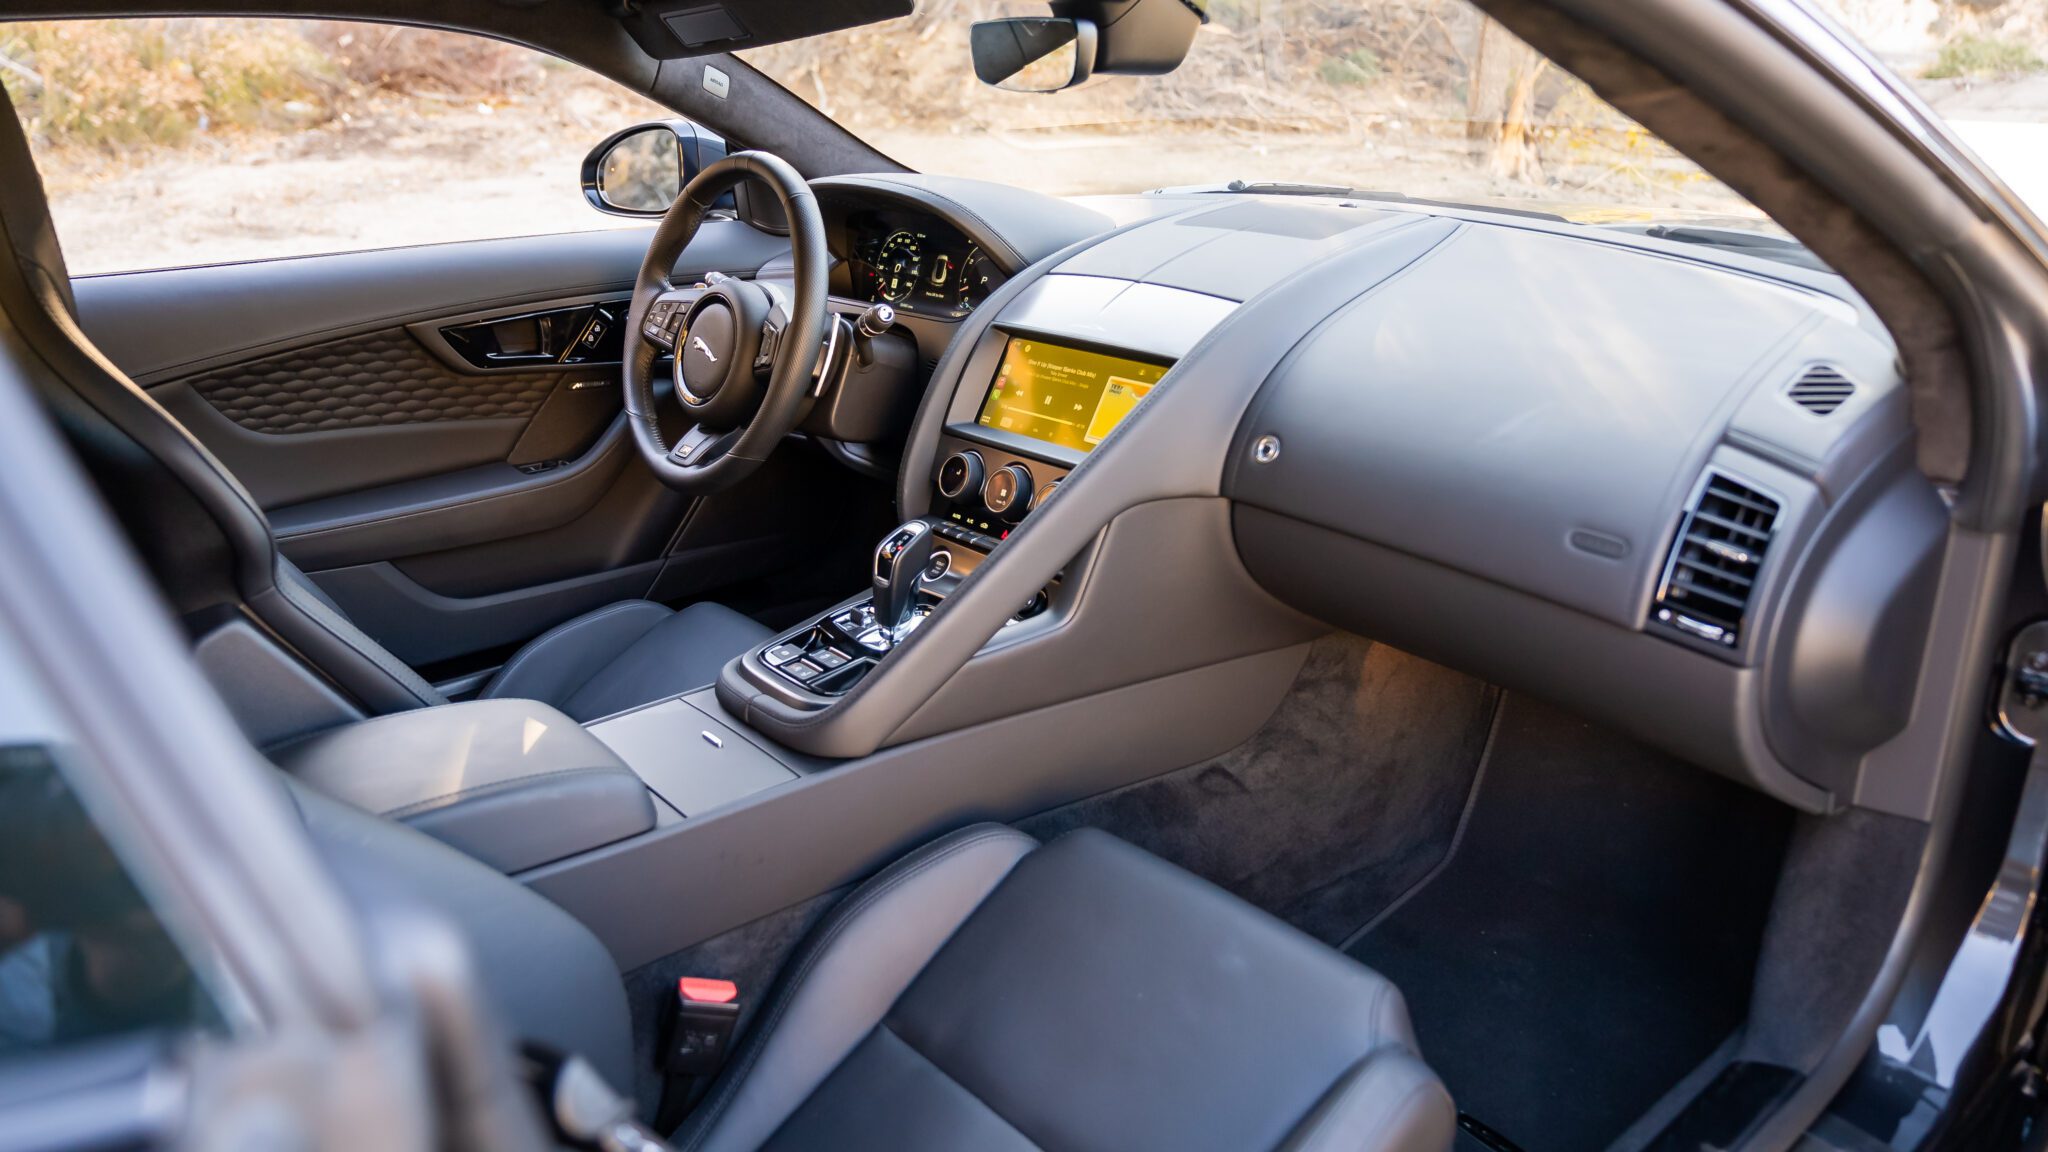 An image of a car's interior.